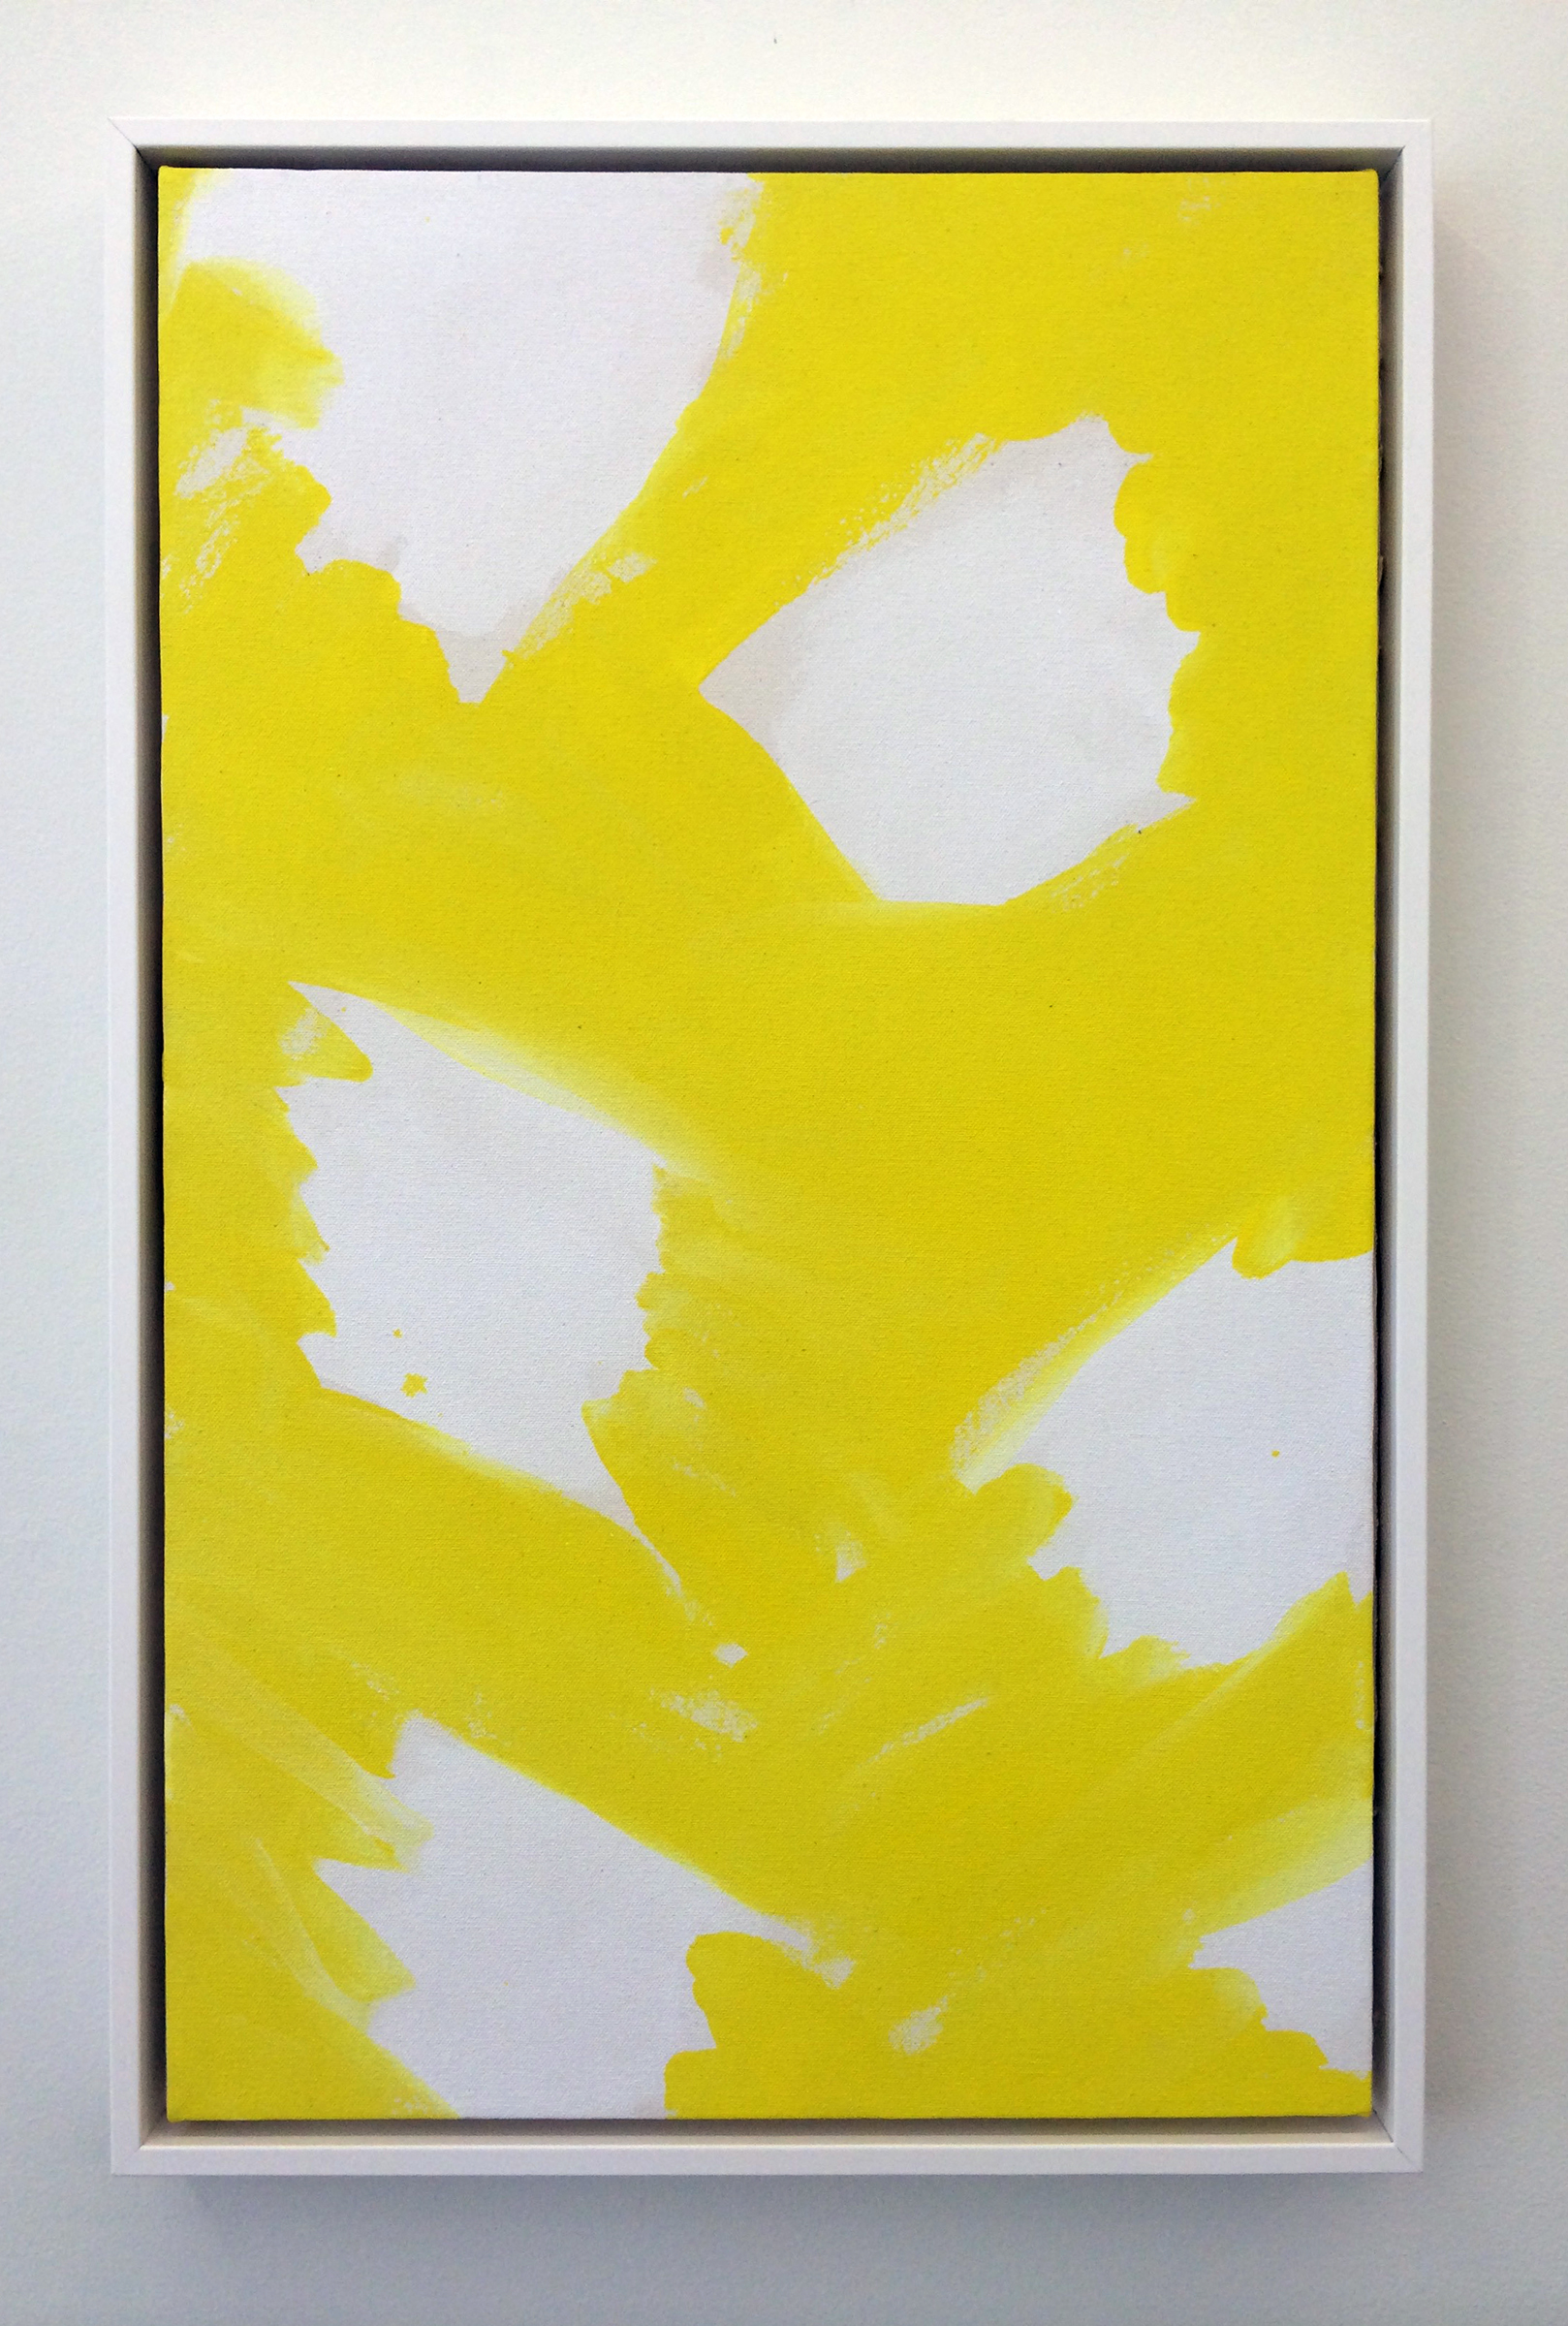   AMANDA CURRERI   Calm Lunatics , 2014, acrylic and rabbit skin glue on canvas, 25" x 16" 